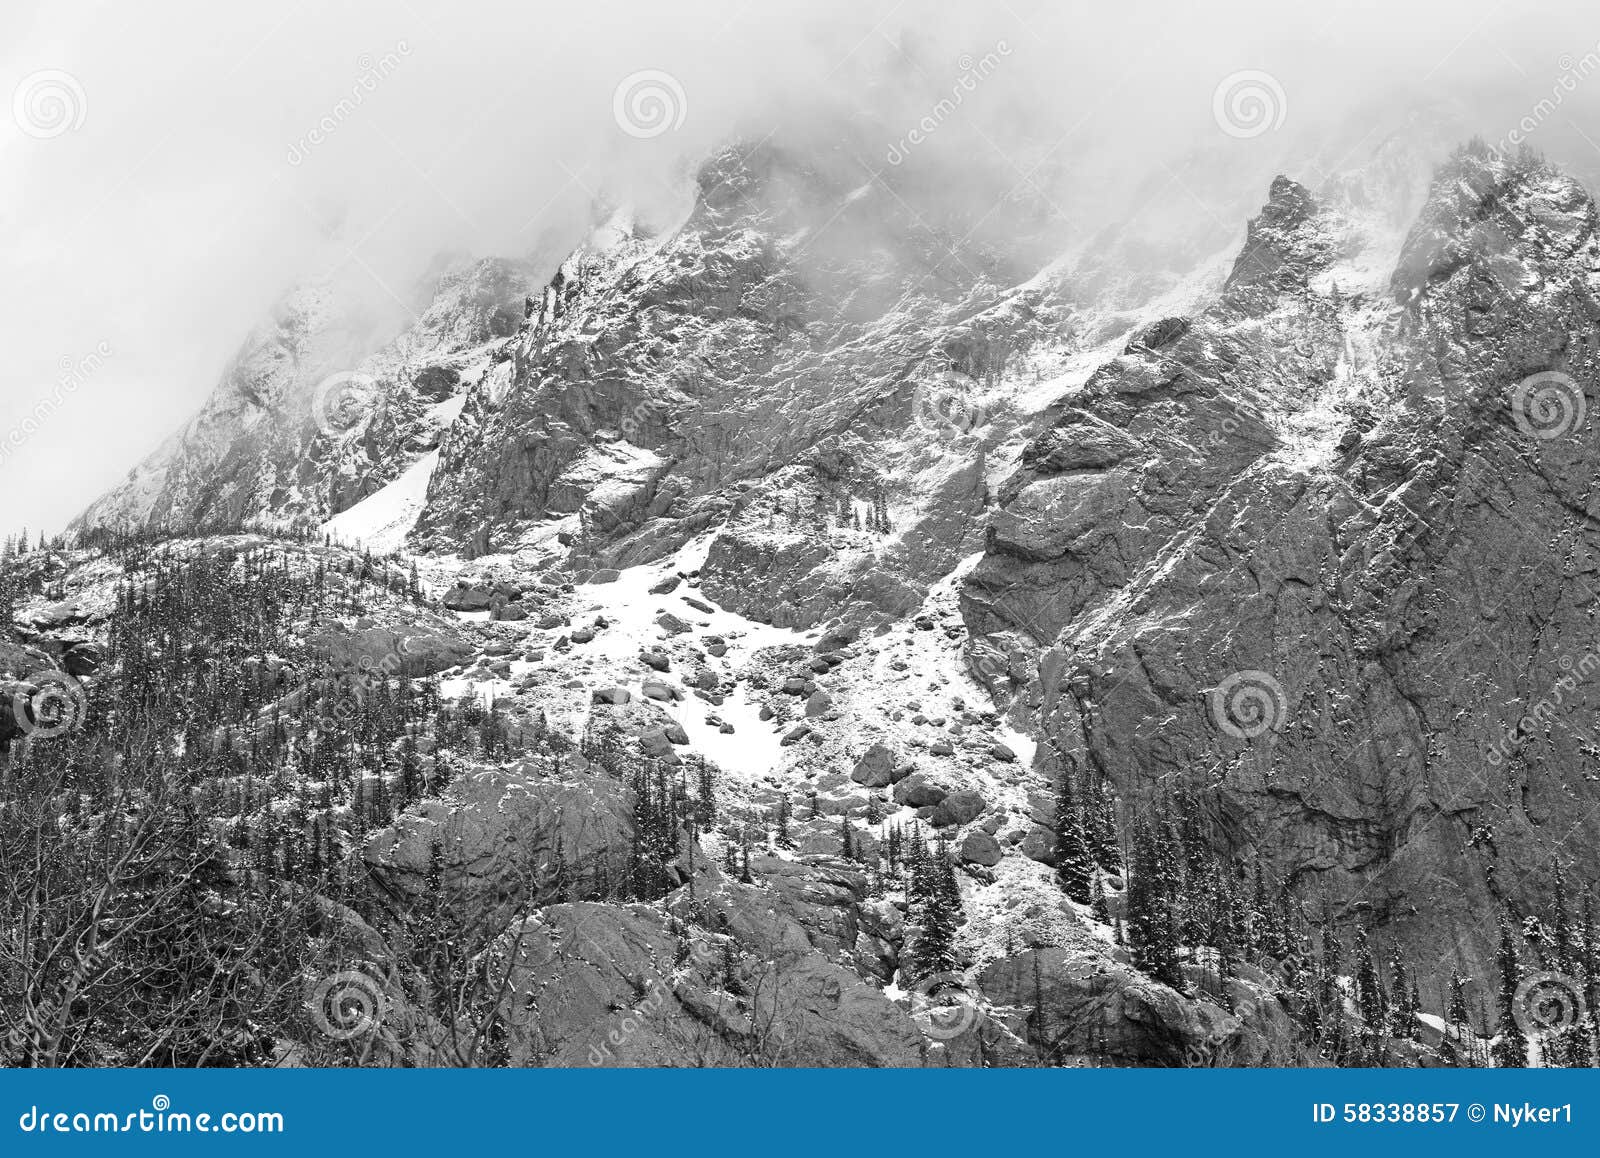 alpine landscape, sangre de cristo range, rocky mountains in colorado